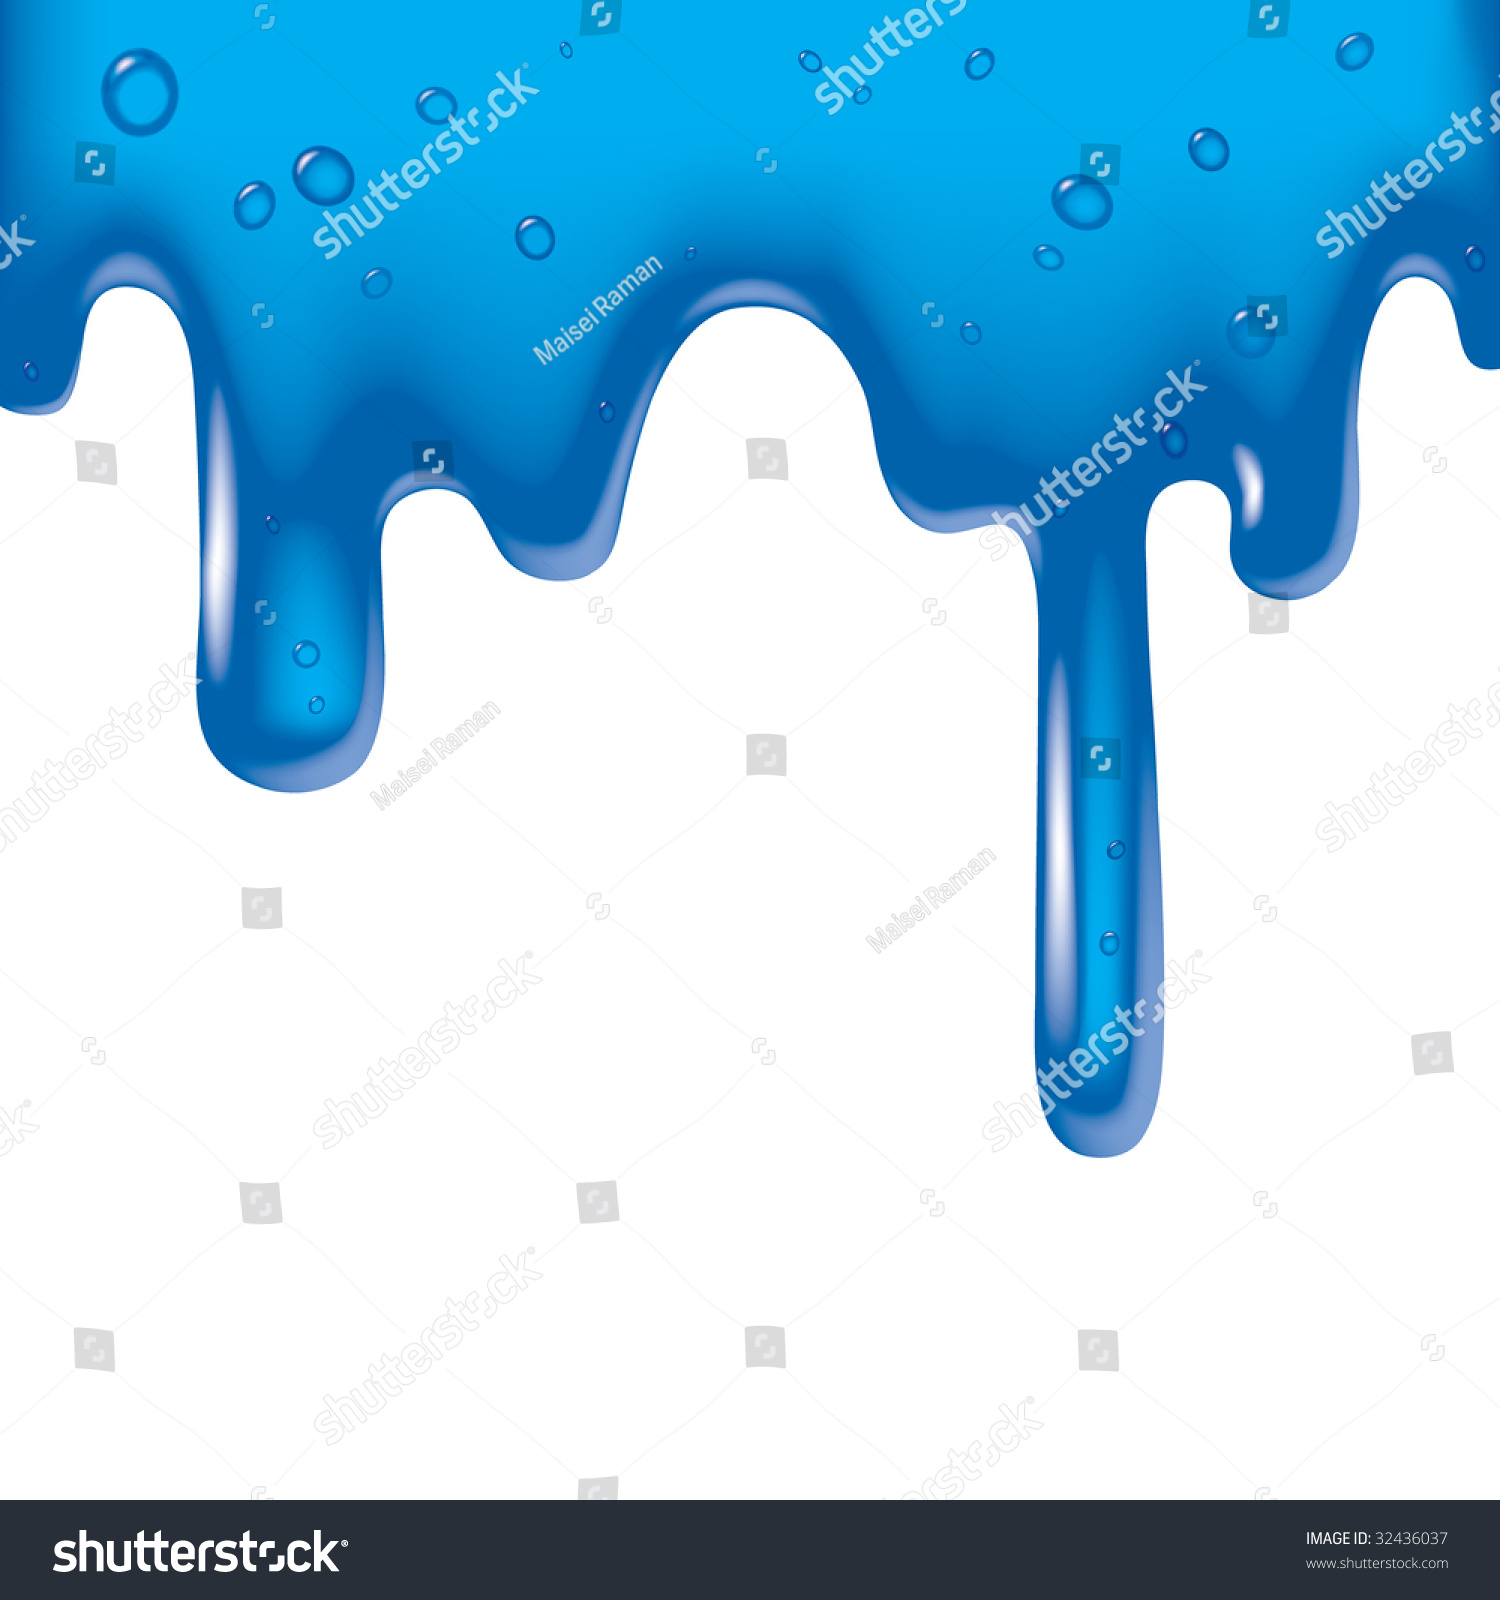 Vector Image Of A Blue Viscous Liquid - 32436037 : Shutterstock